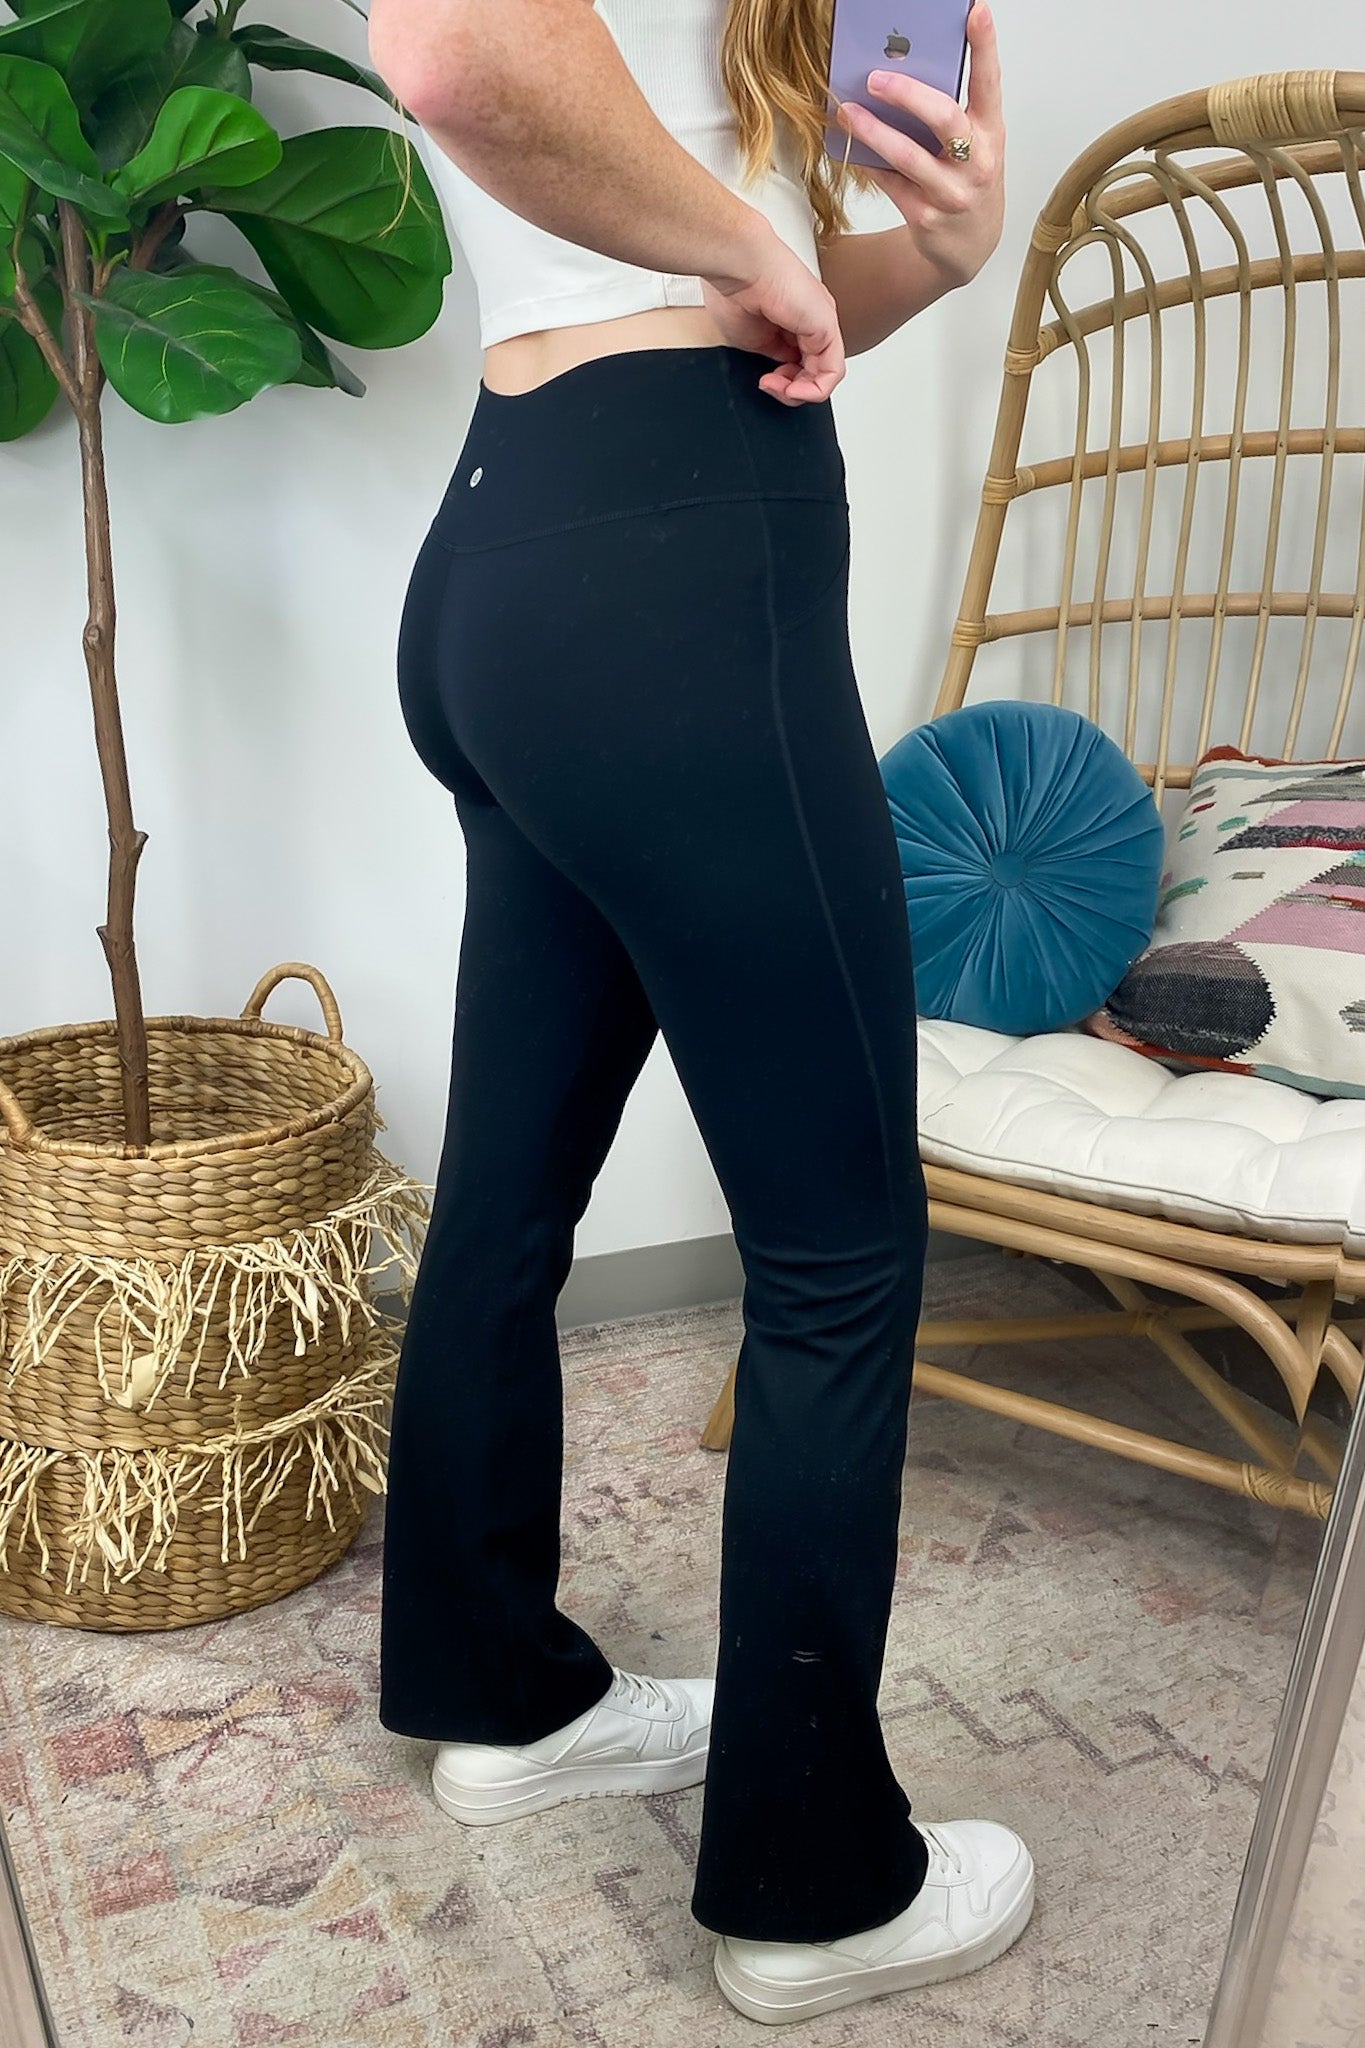 V Waist Micro Flared Cropped Flare Yoga Pants For Women Elastic